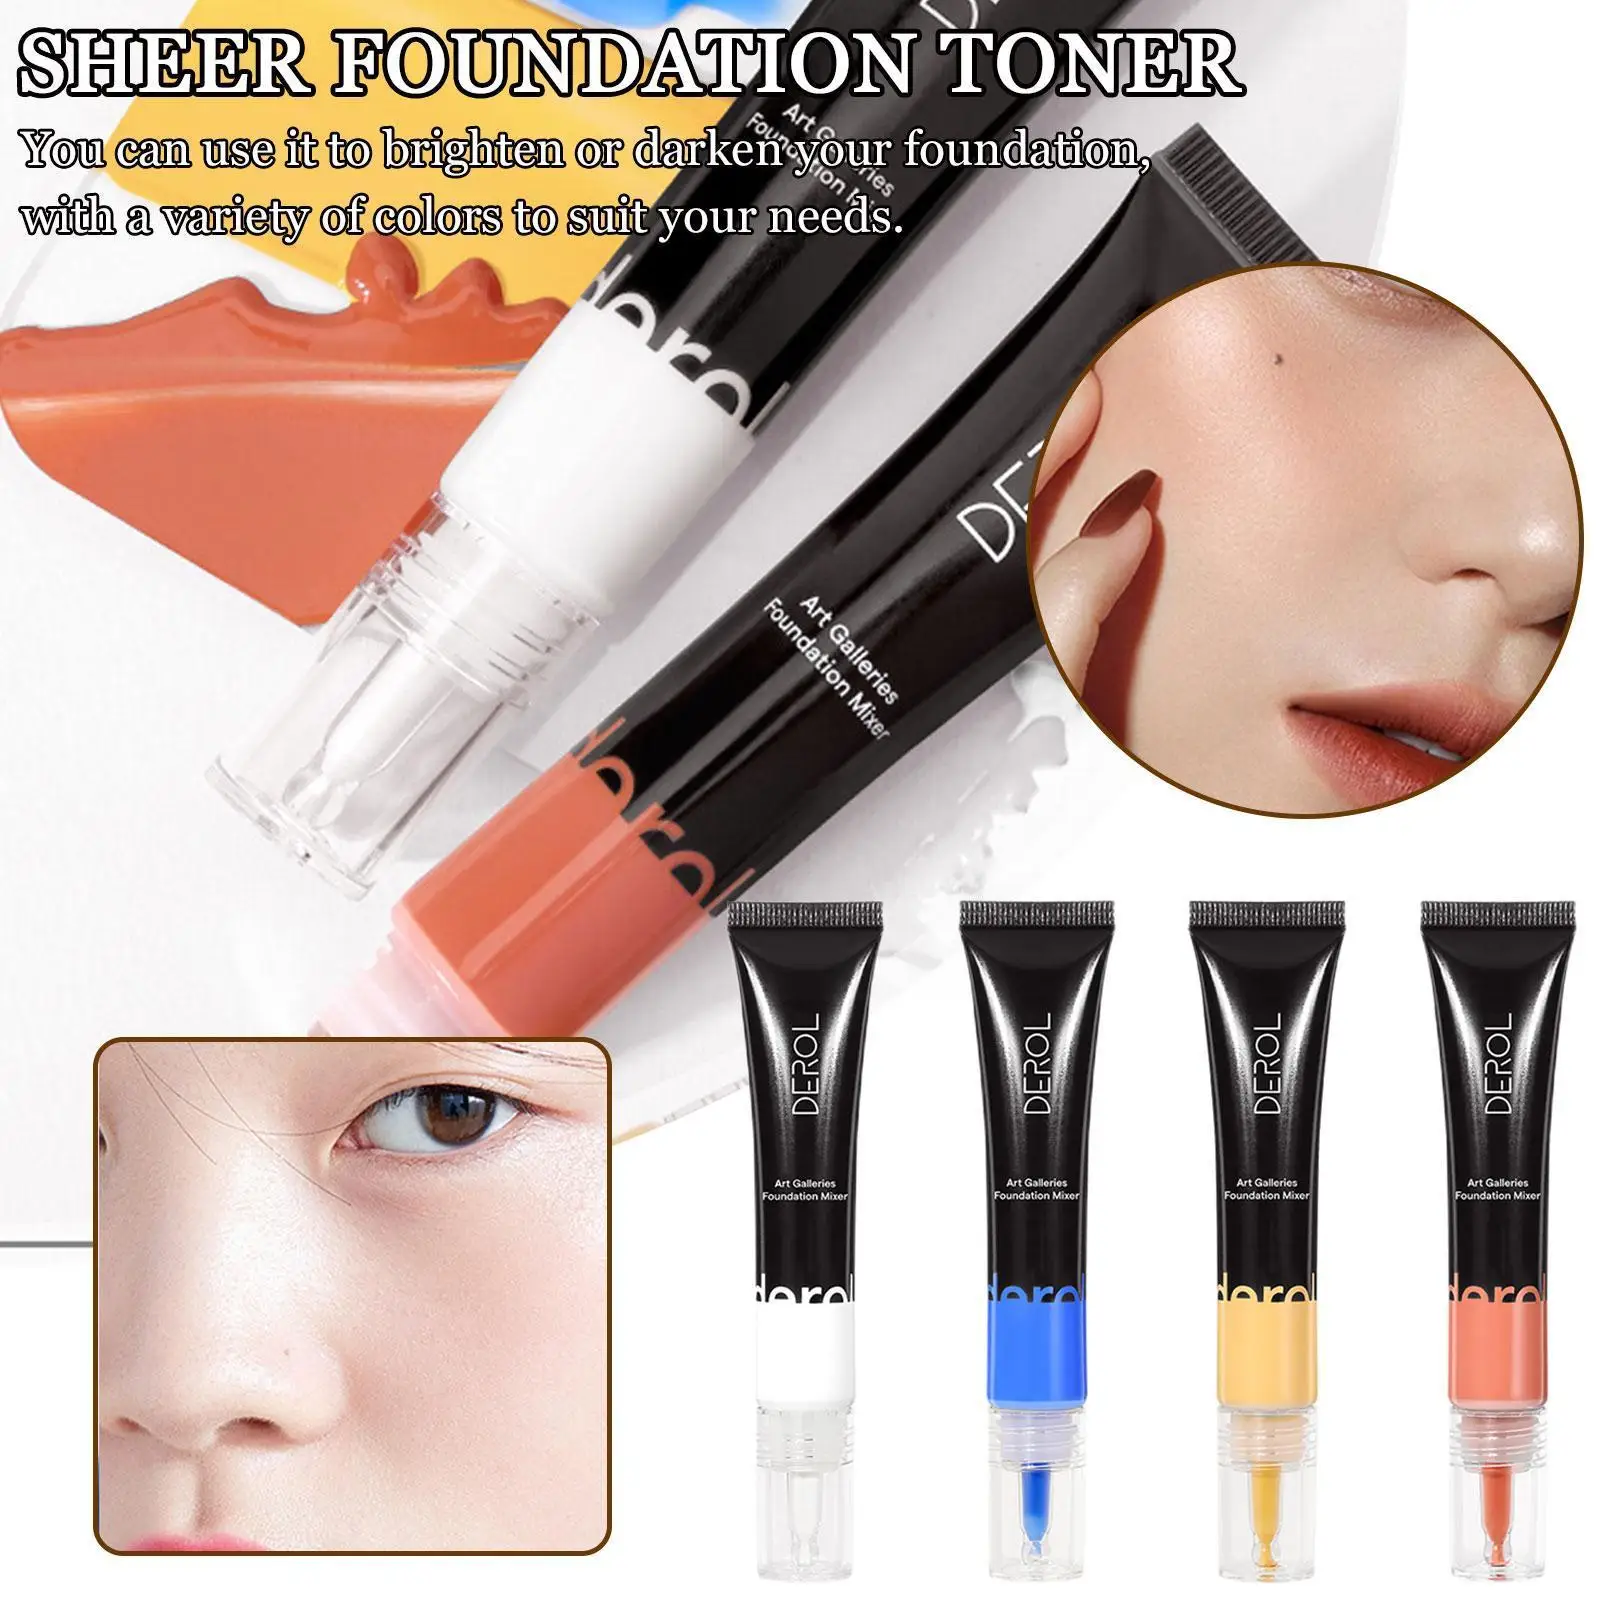 

Color Corrector White Foundation Mixer Color Corrector Skin Makeup For Customizing Foundation Shades Blue Mixing Pigment P7O7